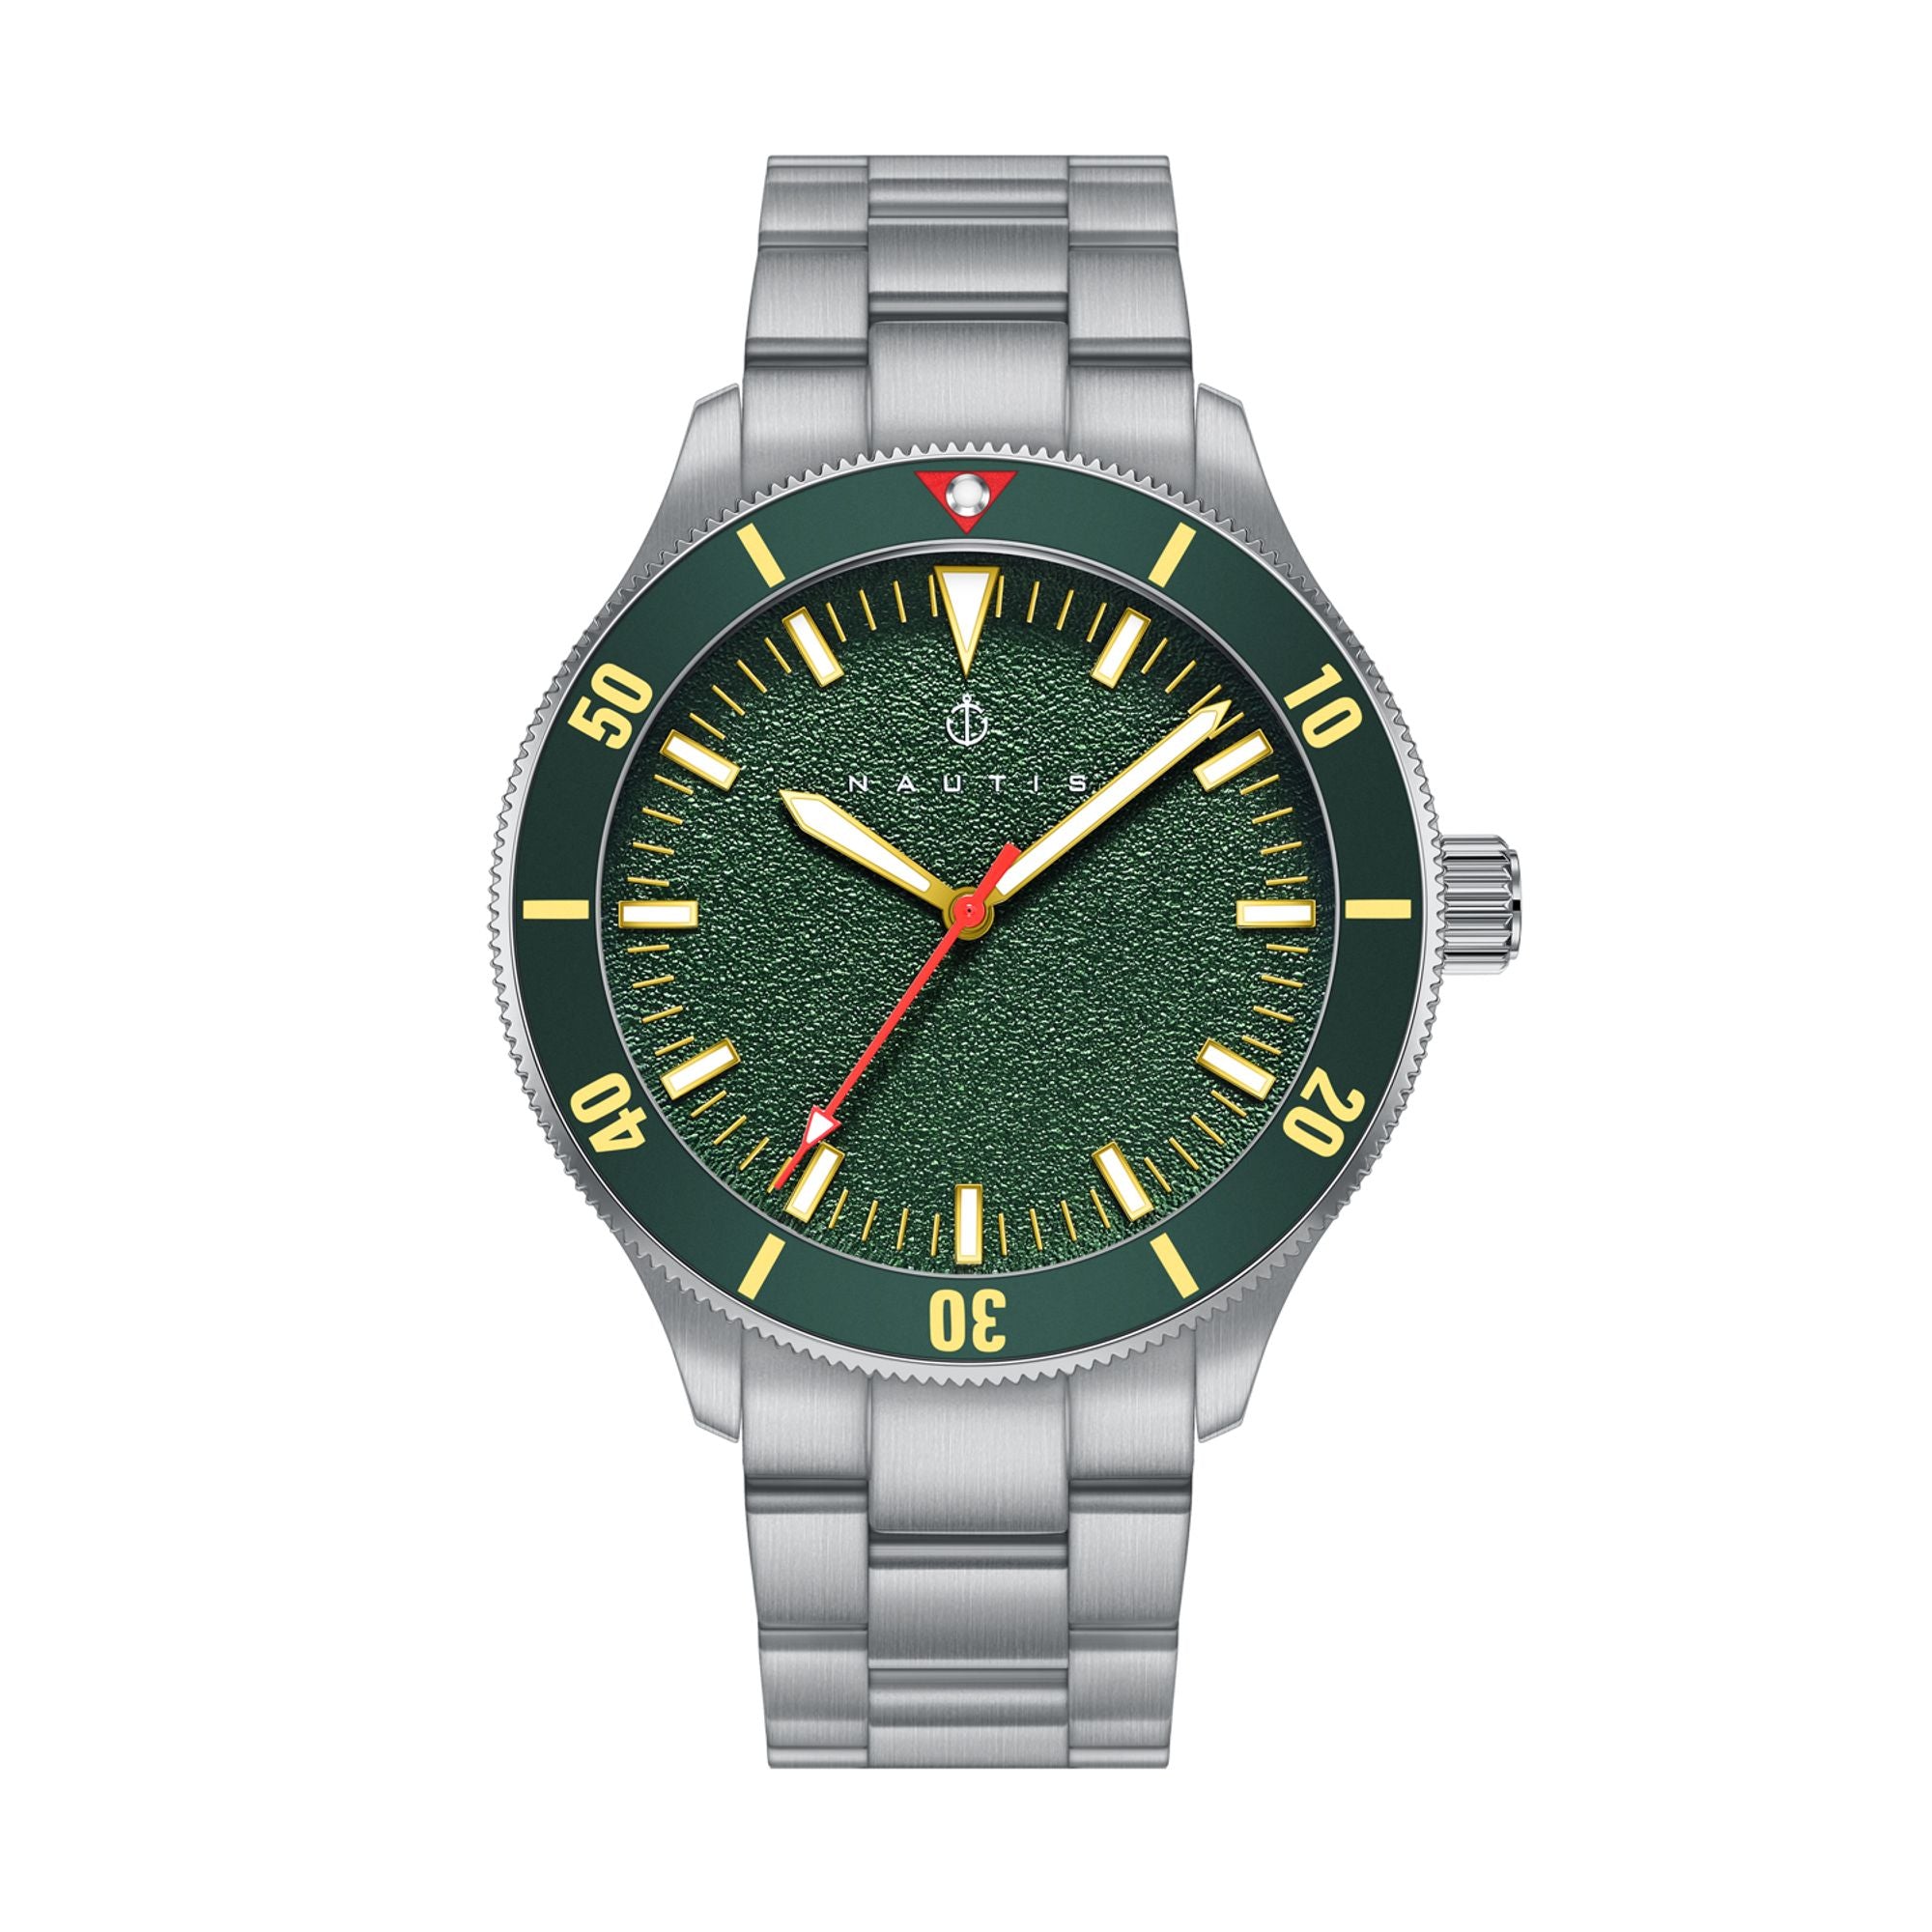 Nautis Deacon Bracelet Watch - Silver/Green - NAUN101-2